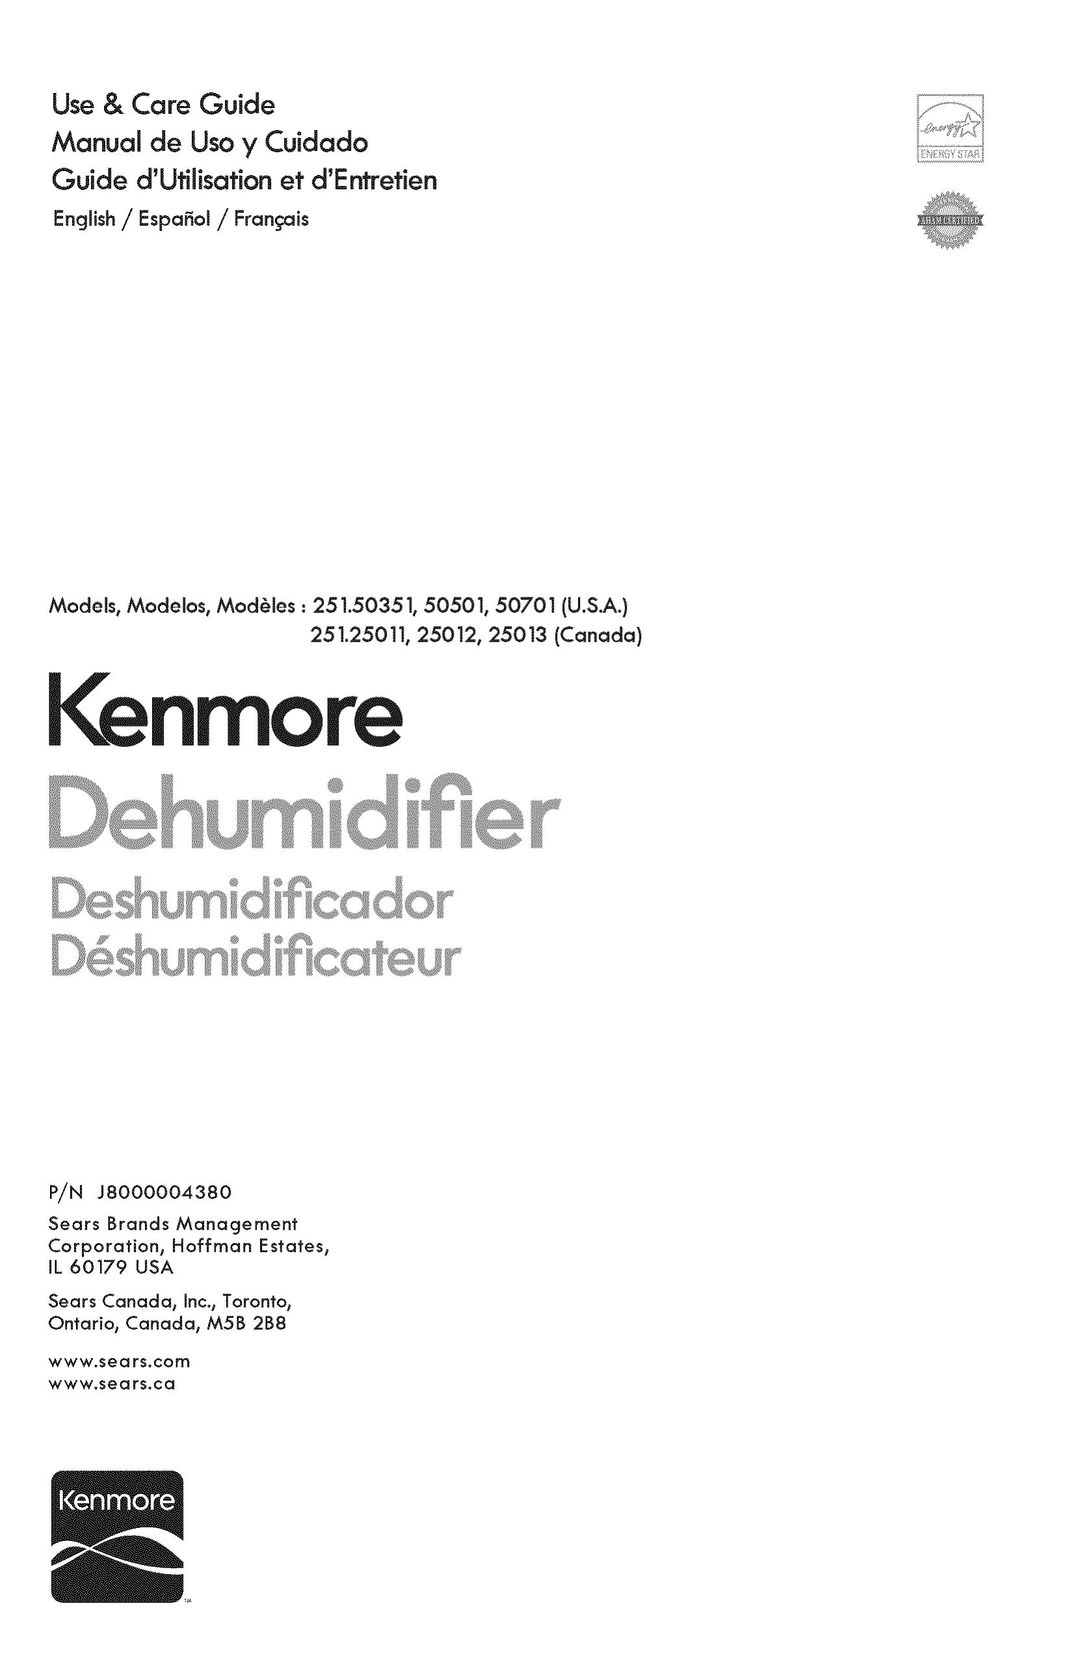 Kenmore 251.25013 Dehumidifier User Manual